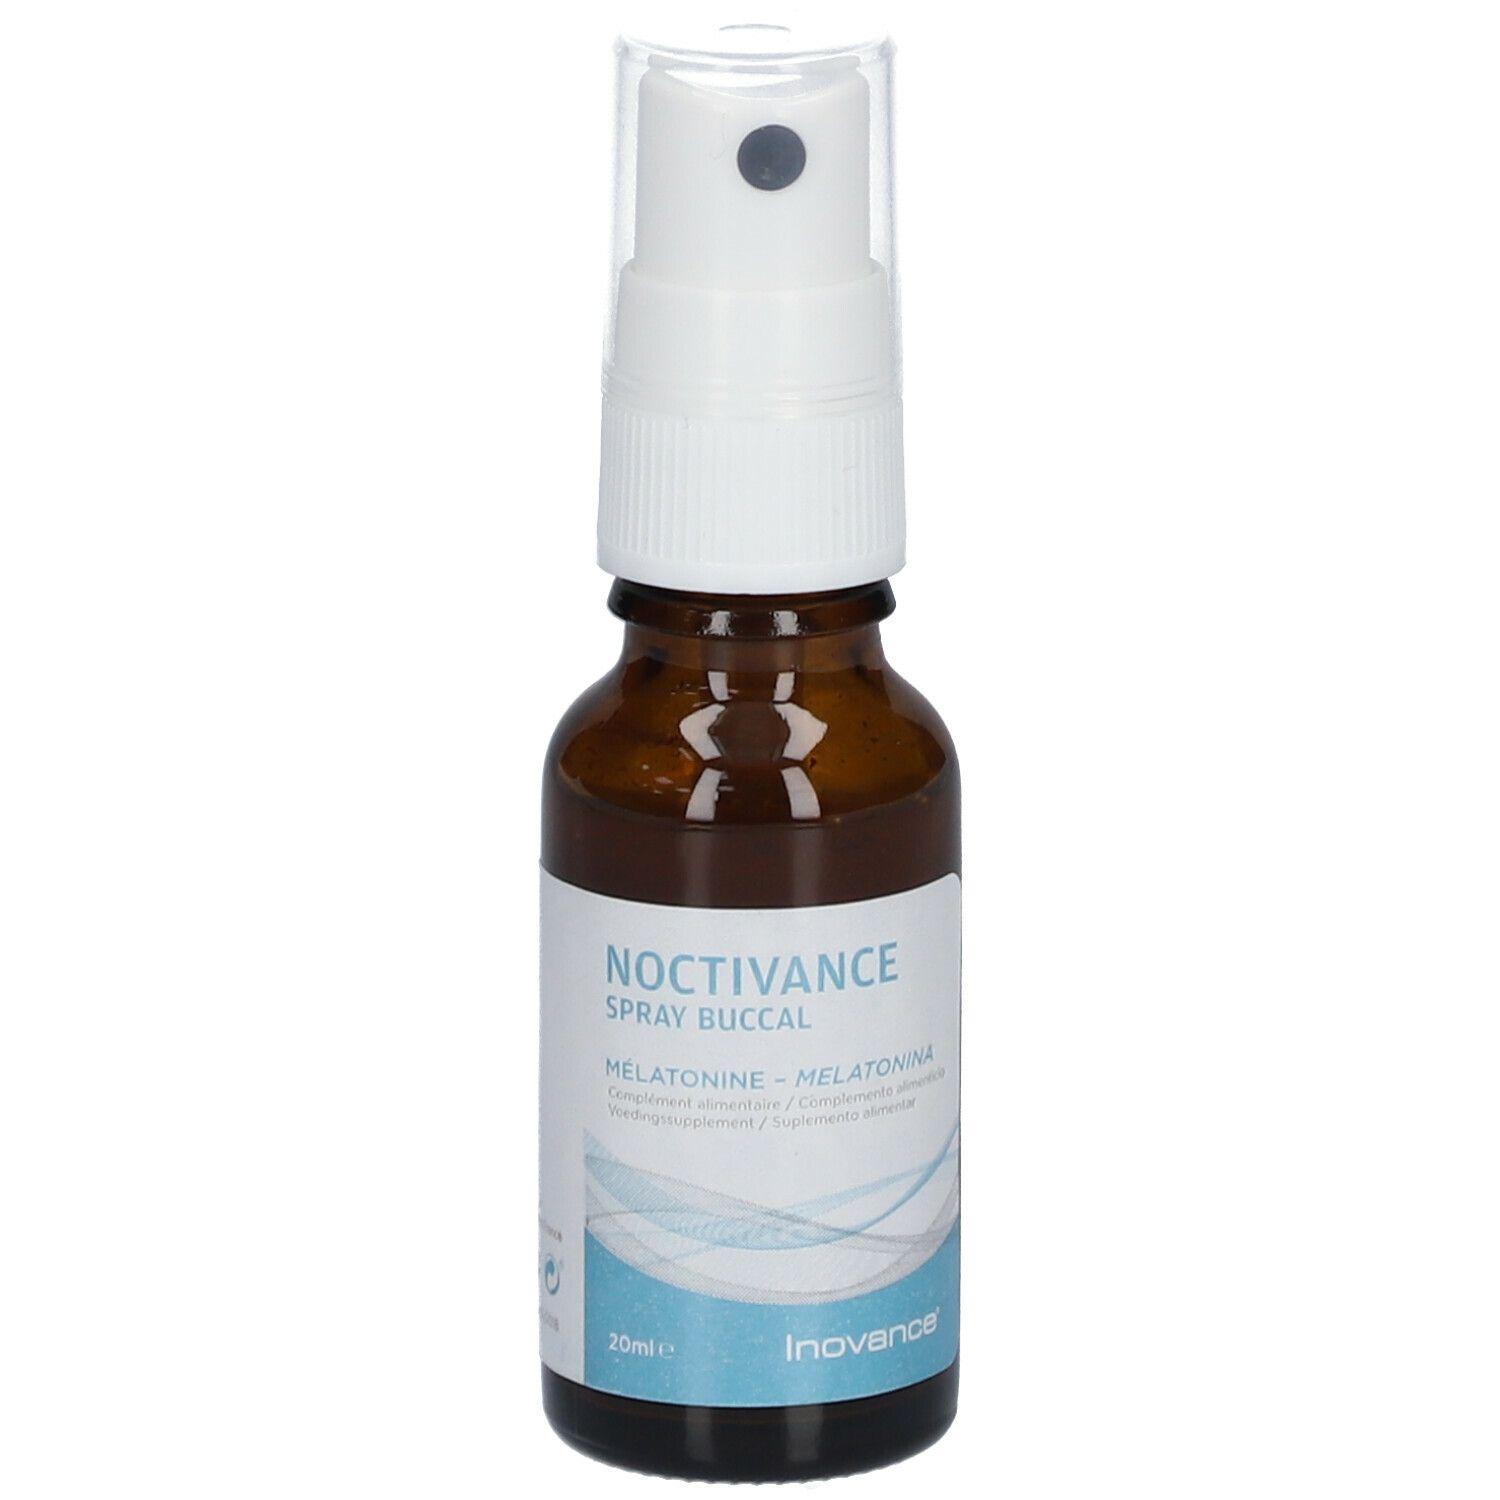 Inovance® Noctivance Spray buccal